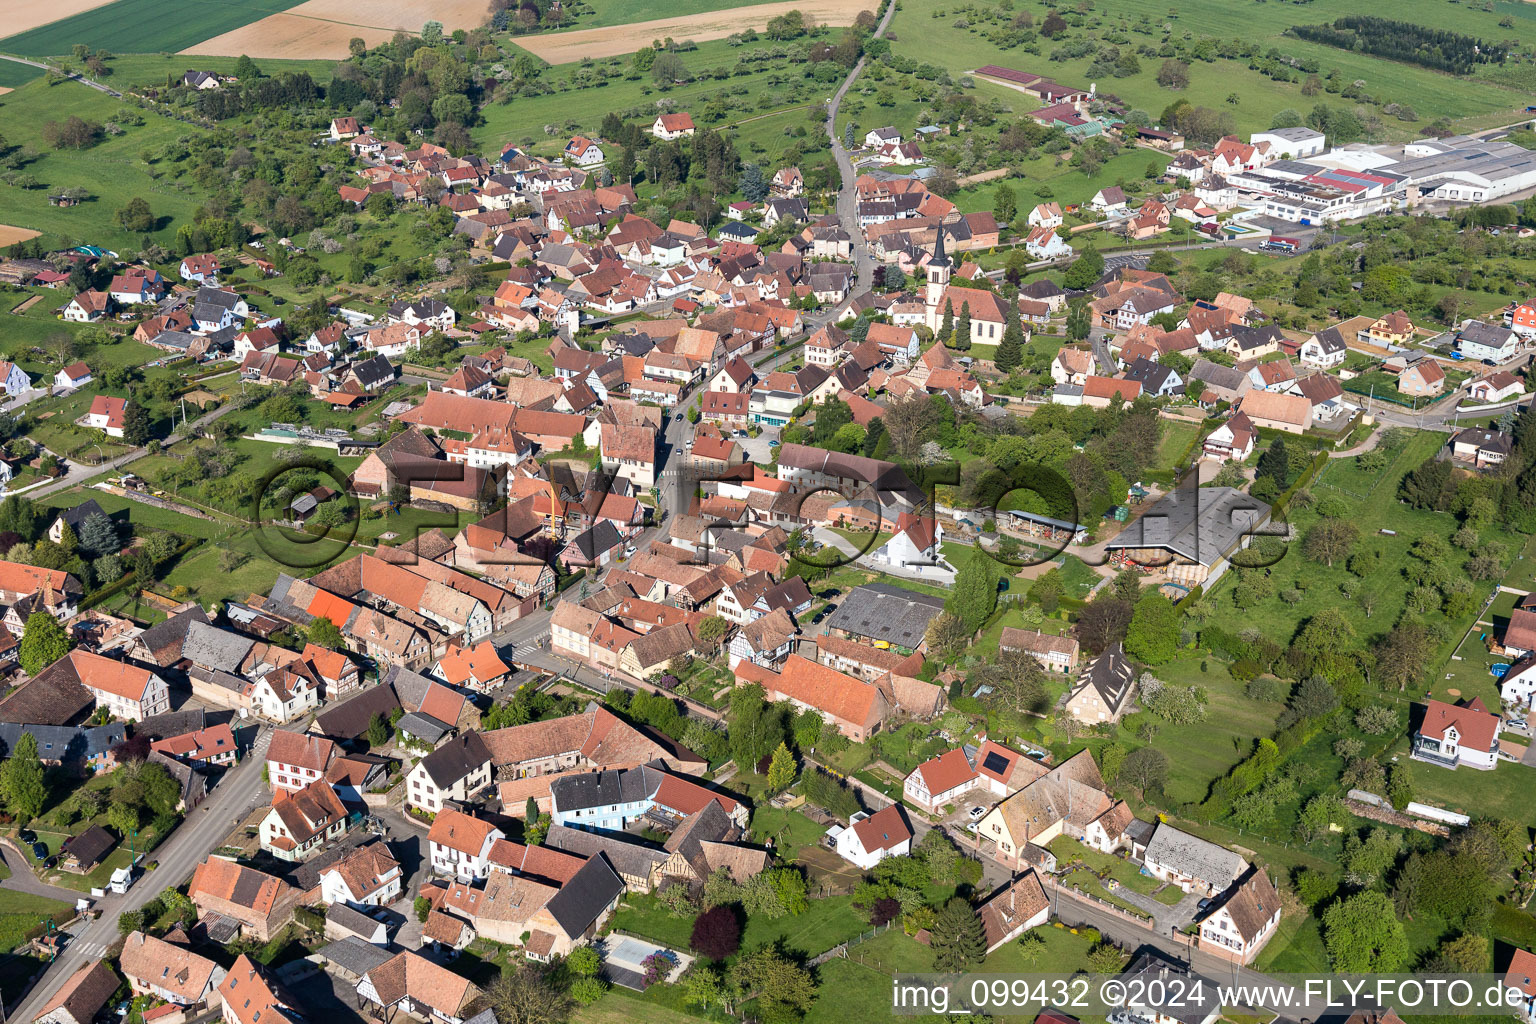 Village view in Mietesheim in Grand Est, France